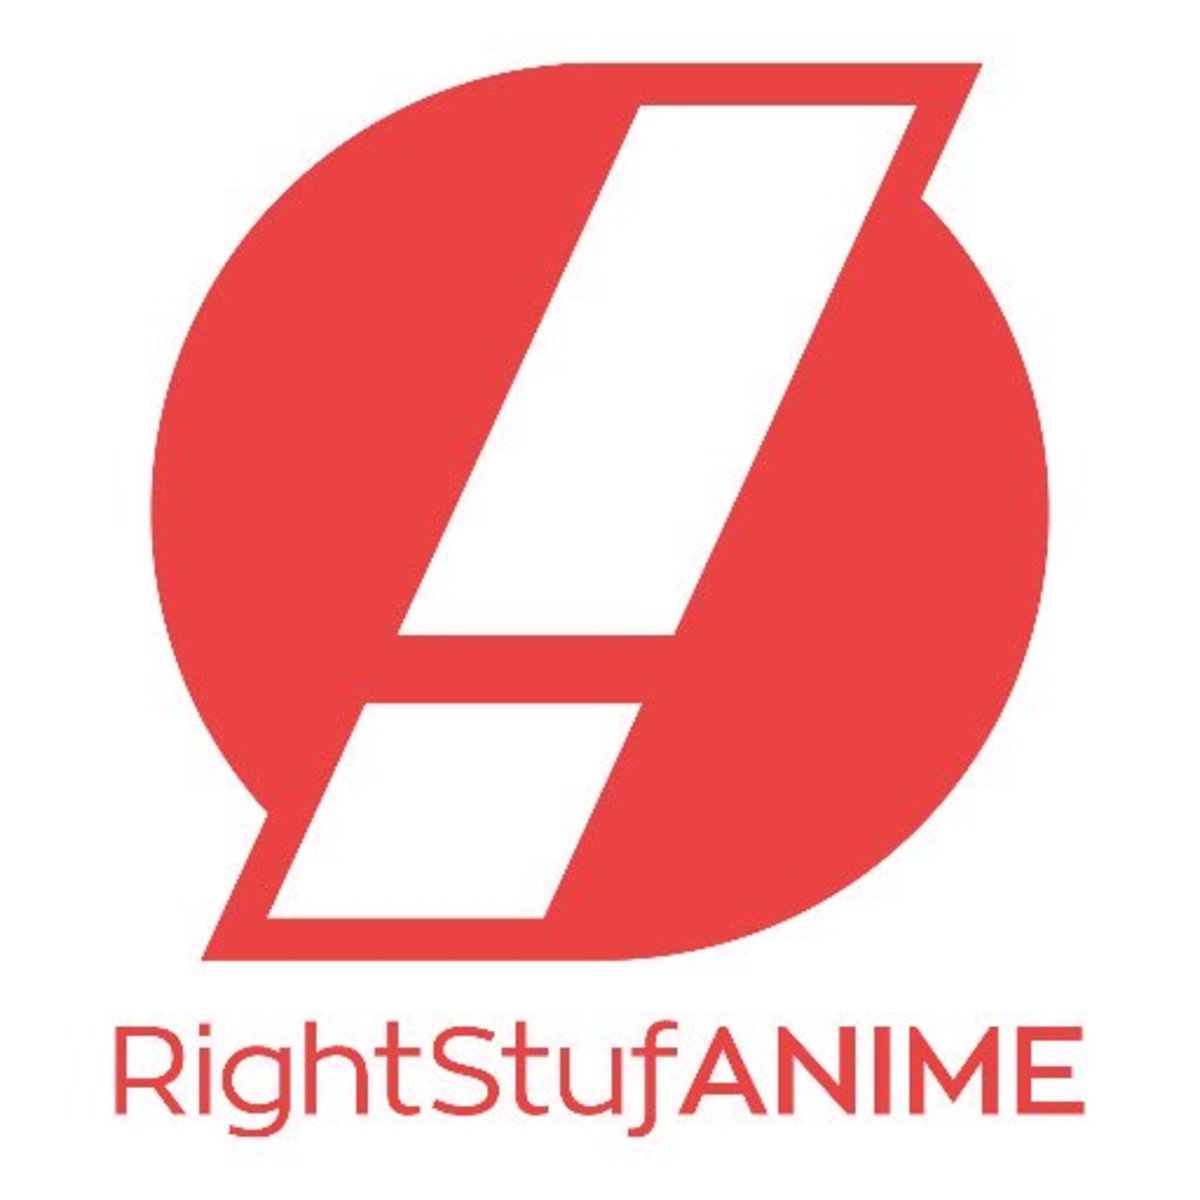 Is rightstufanime a completely legit site  ranime